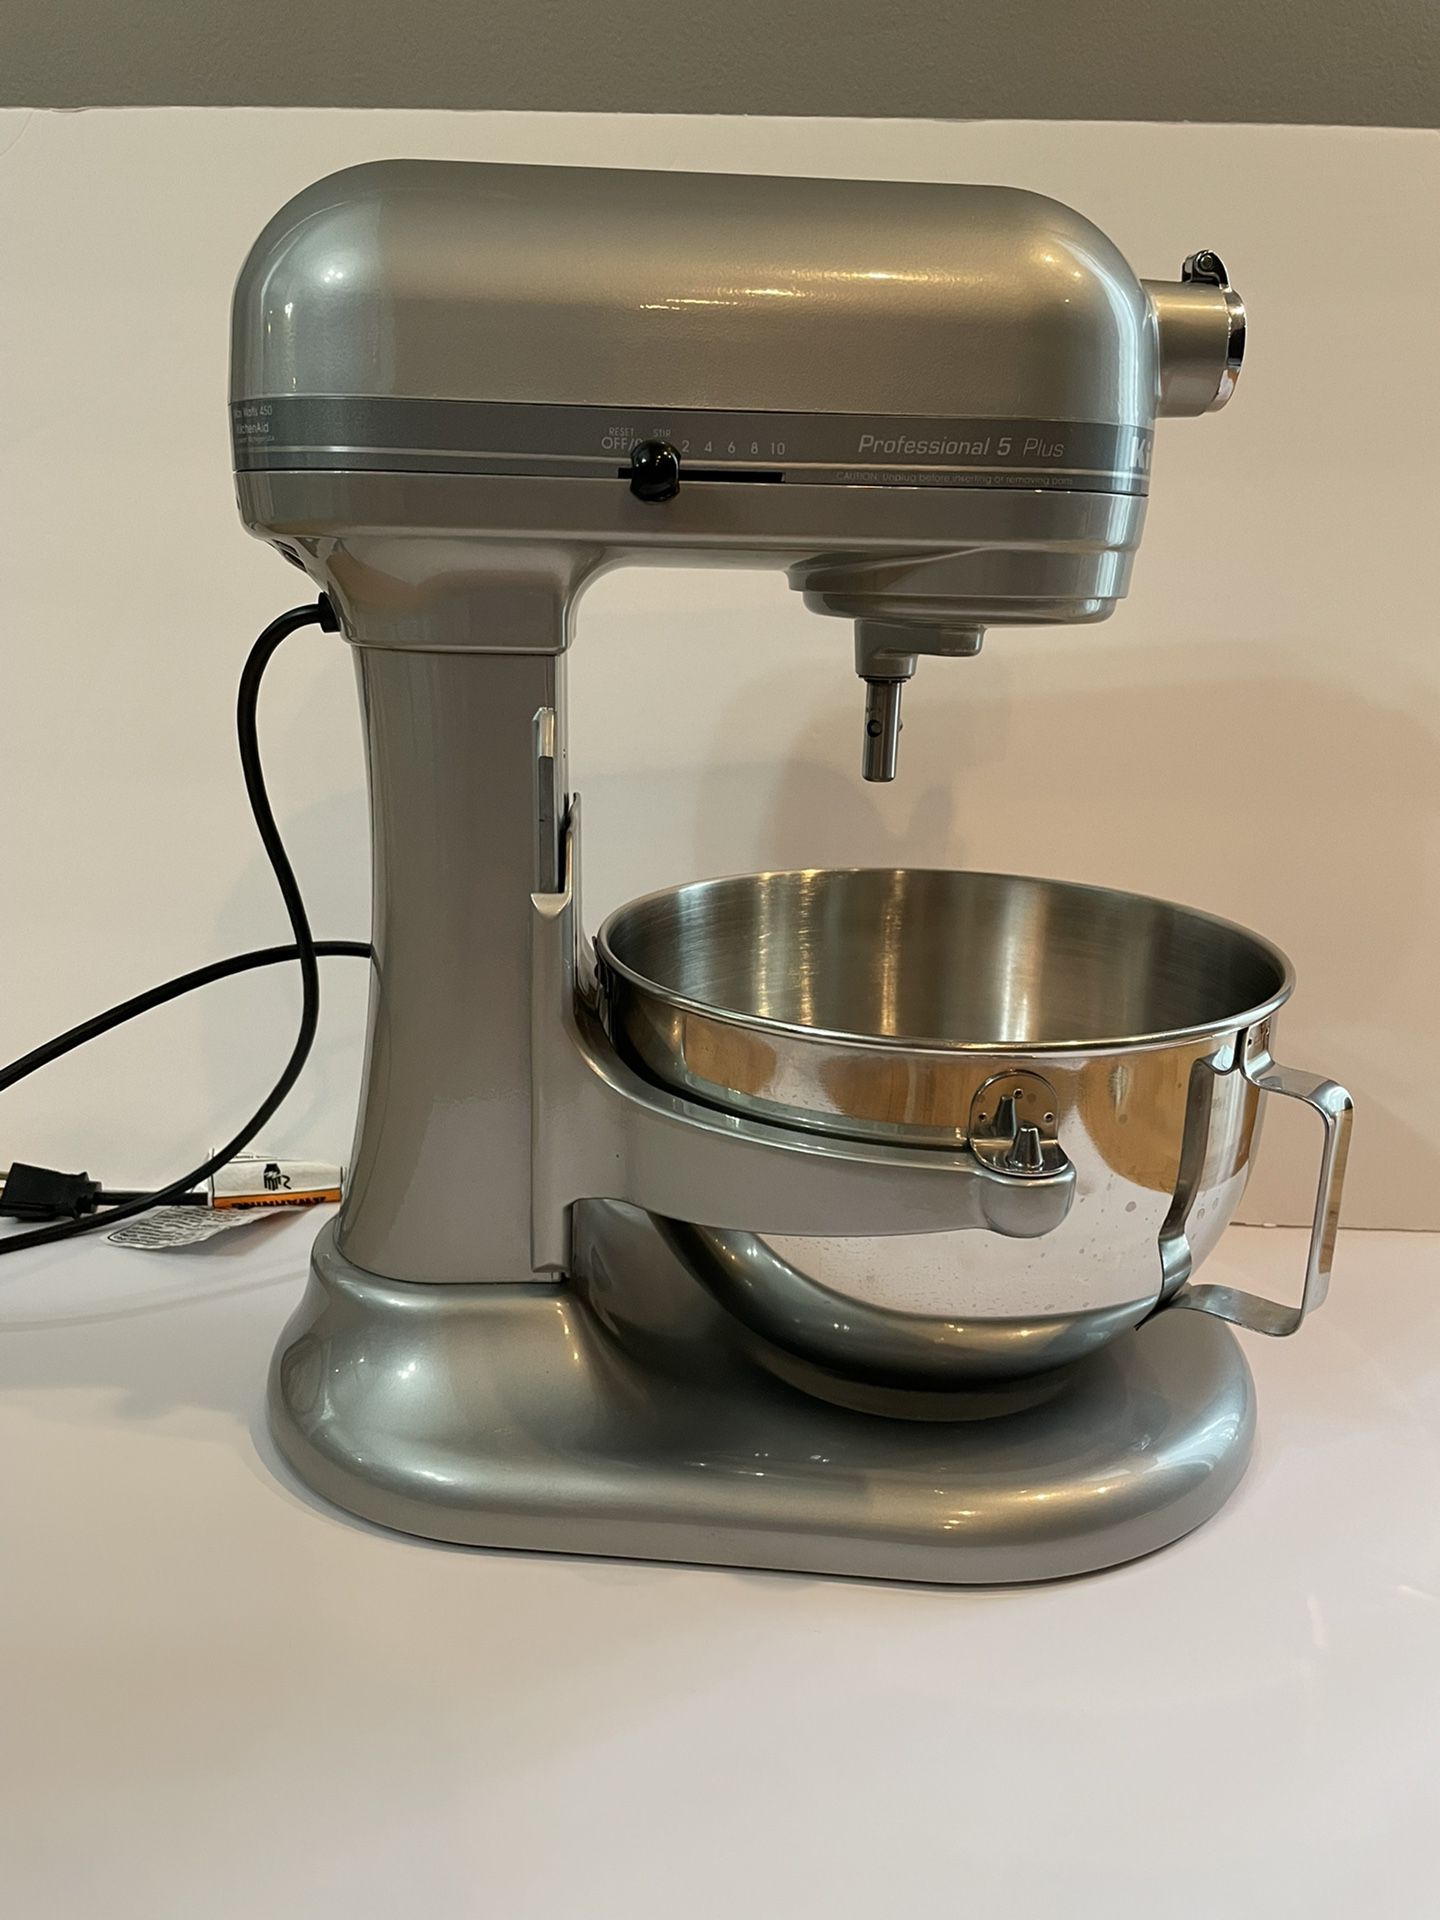 Kitchenaid Professional 600 Series 6 Quart Bowl-Lift Stand Mixer for Sale  in Virginia Beach, VA - OfferUp